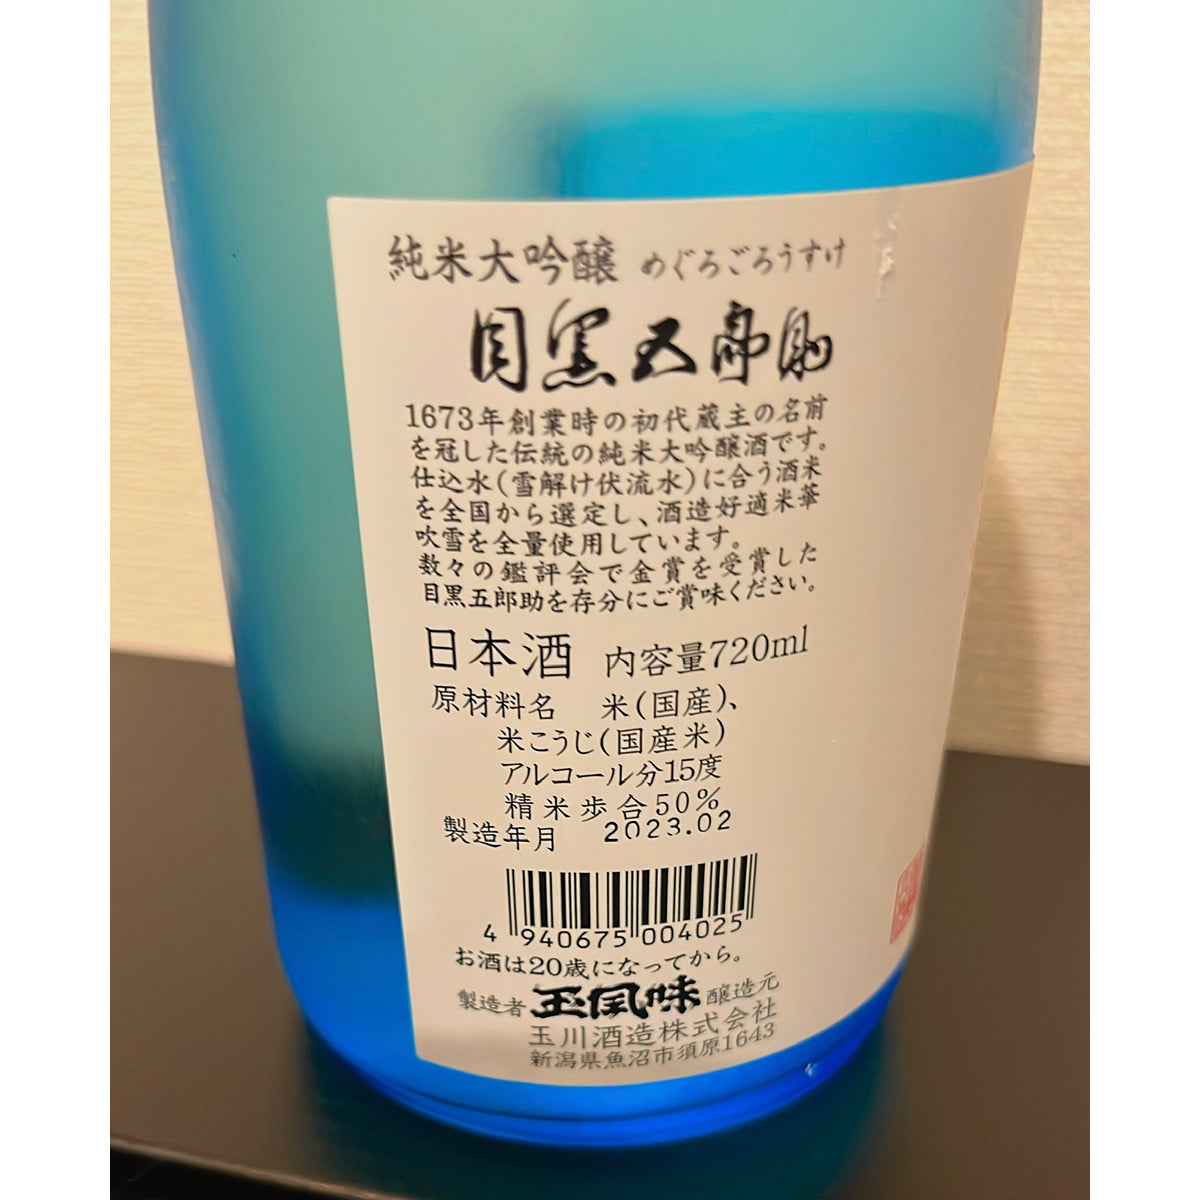 Meguro Gorosuke Junmai Daiginjo 720ml Tamagawa Sake Brewery Co., Ltd.